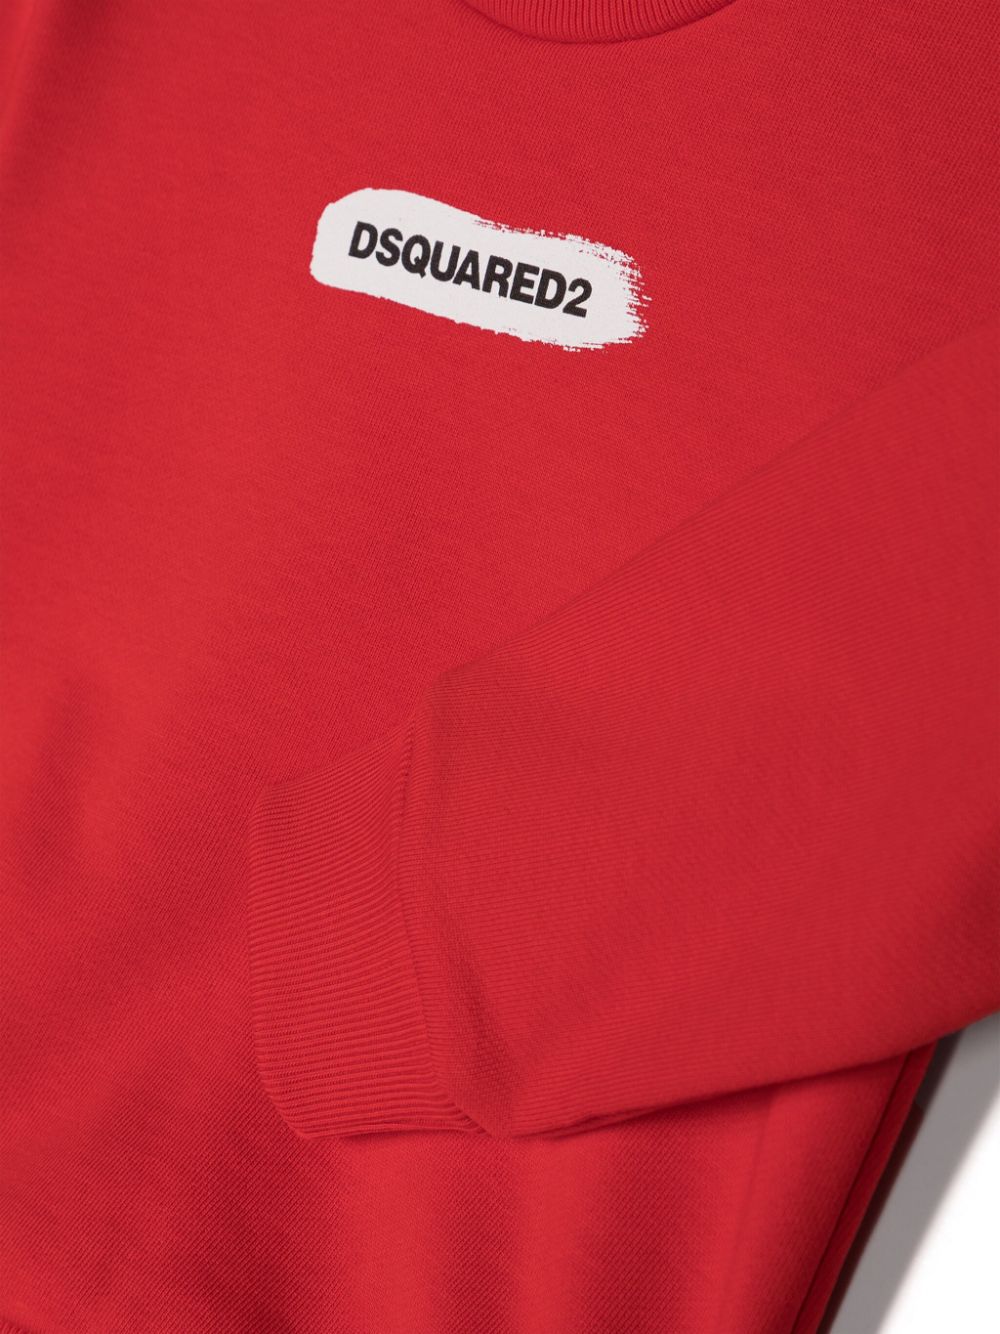 Red sweatshirt for newborns with logo